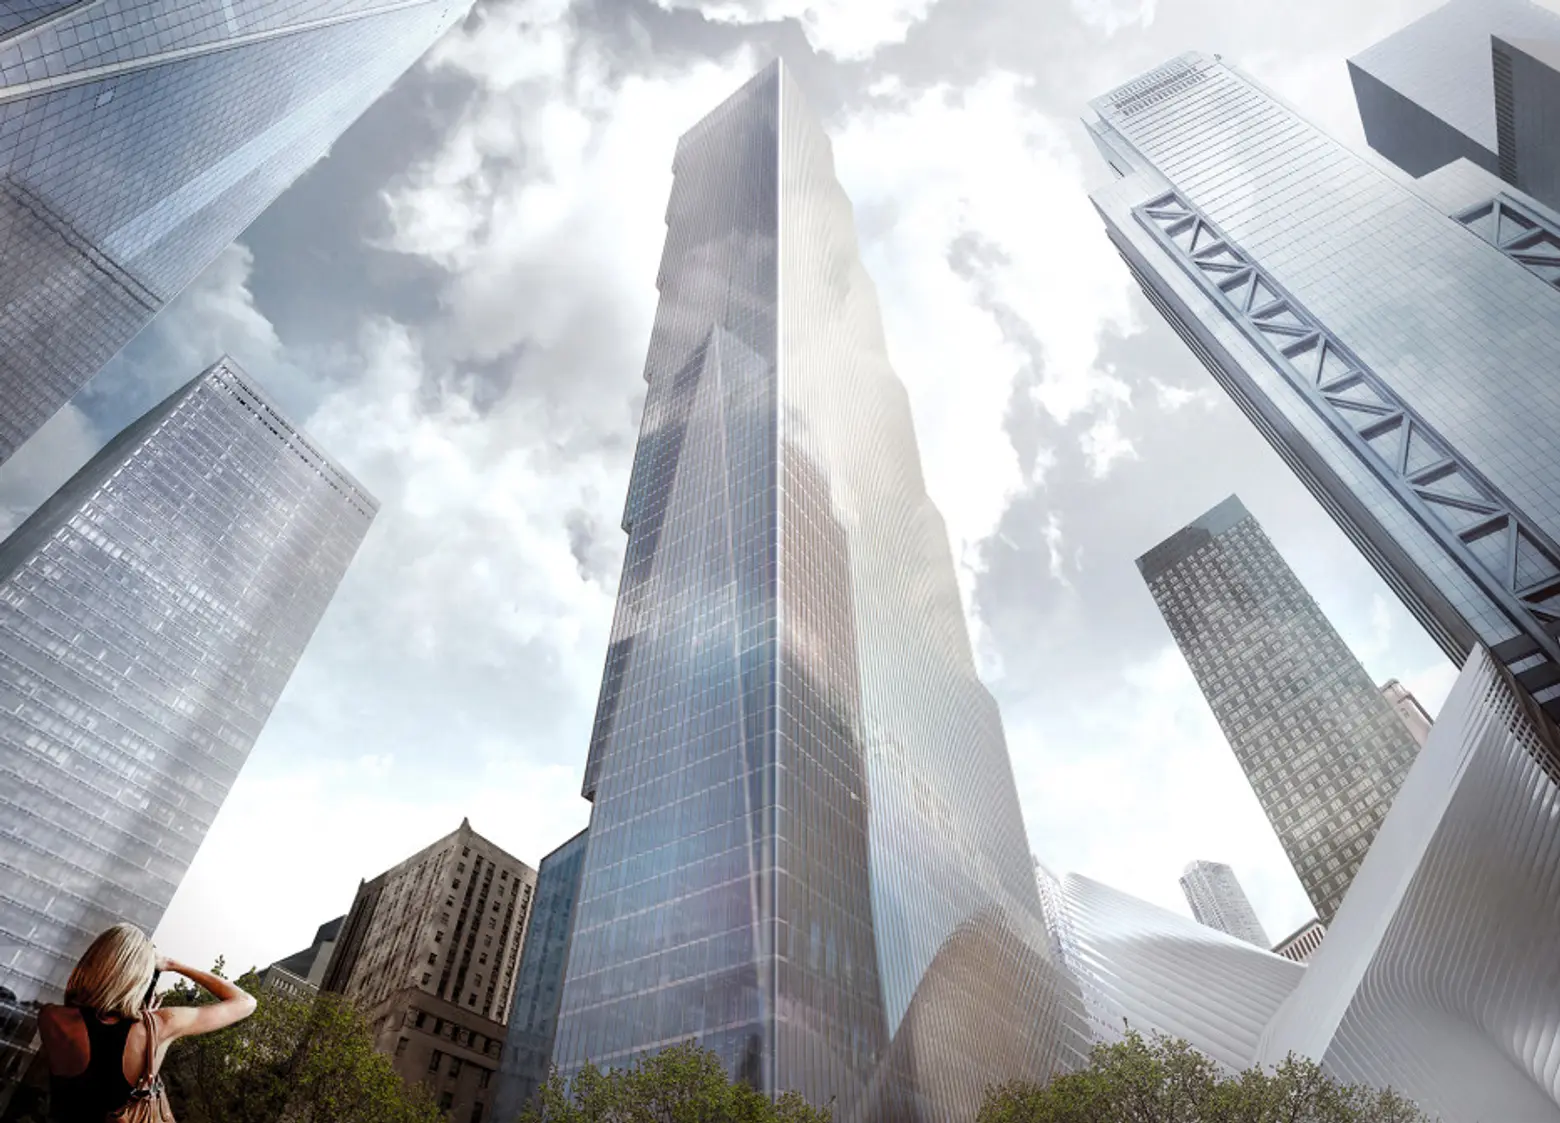 REVEALED: Bjarke Ingels Design for 2 World Trade Center